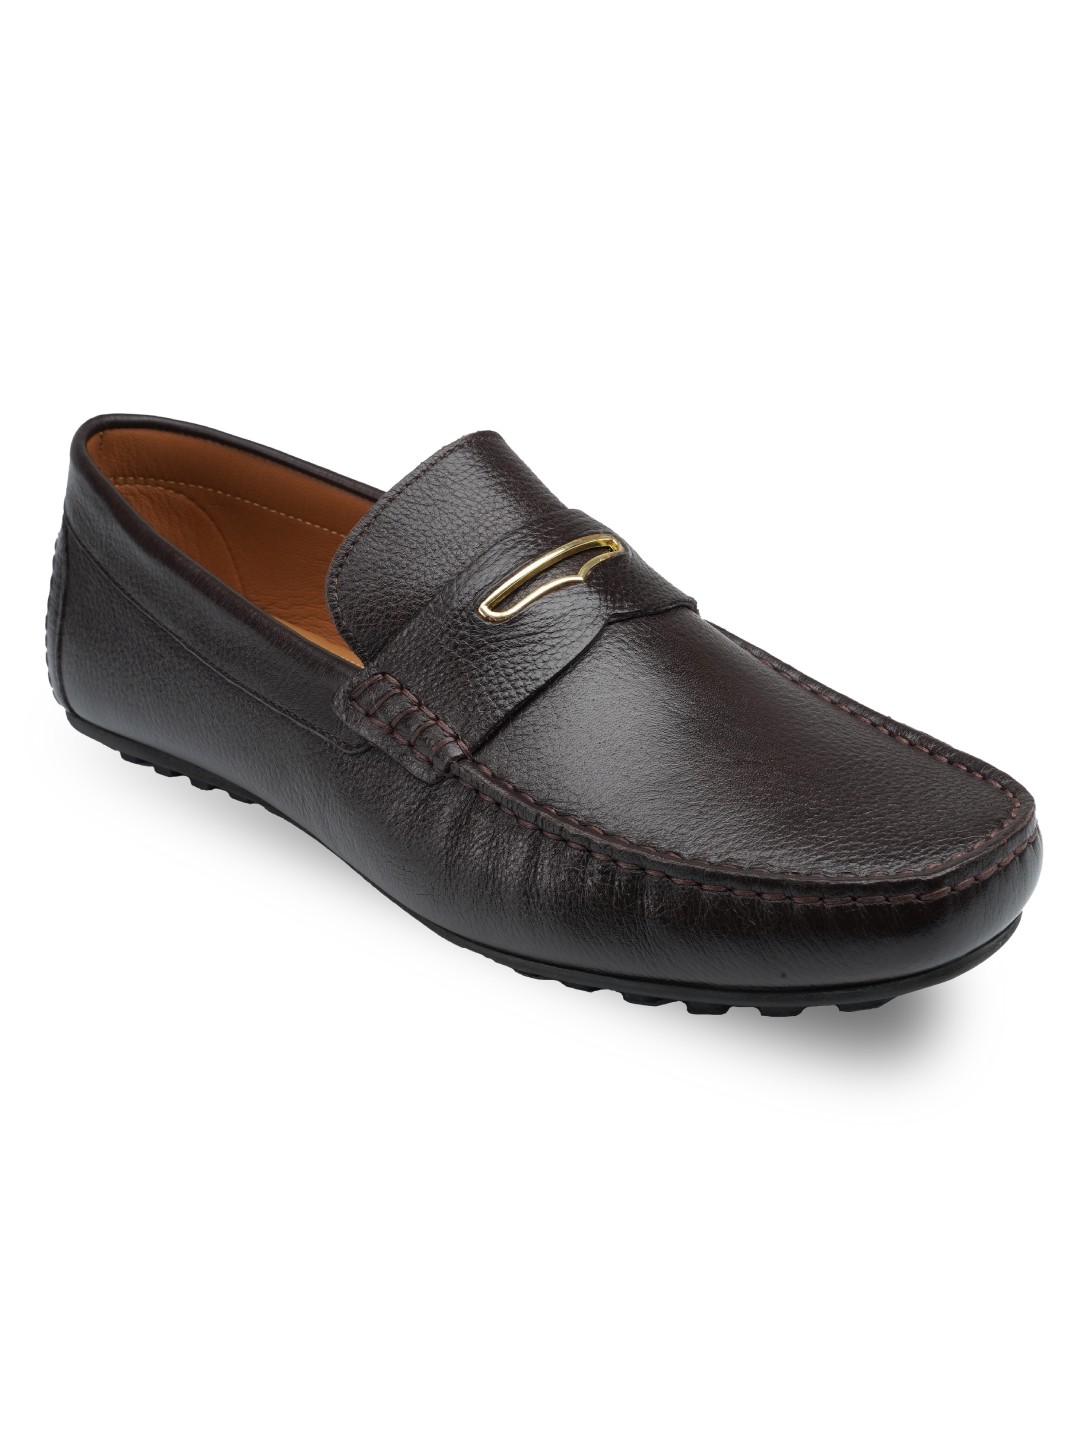 Brown Penny Premium Moccasins leather shoes for men | Rapawalk